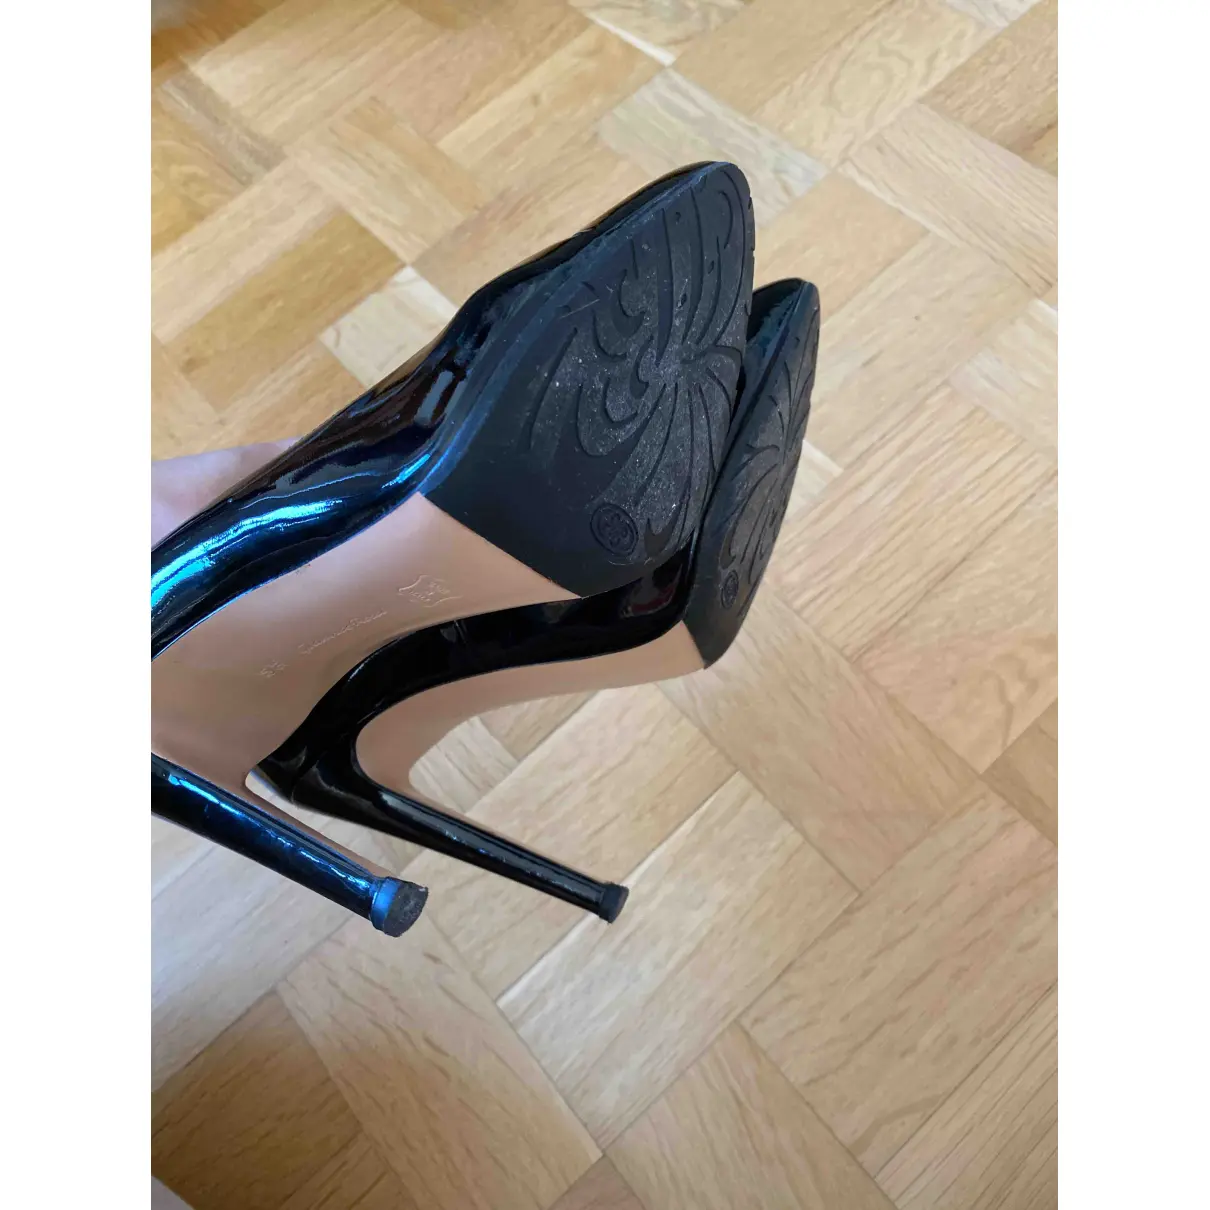 Patent leather heels Gianvito Rossi